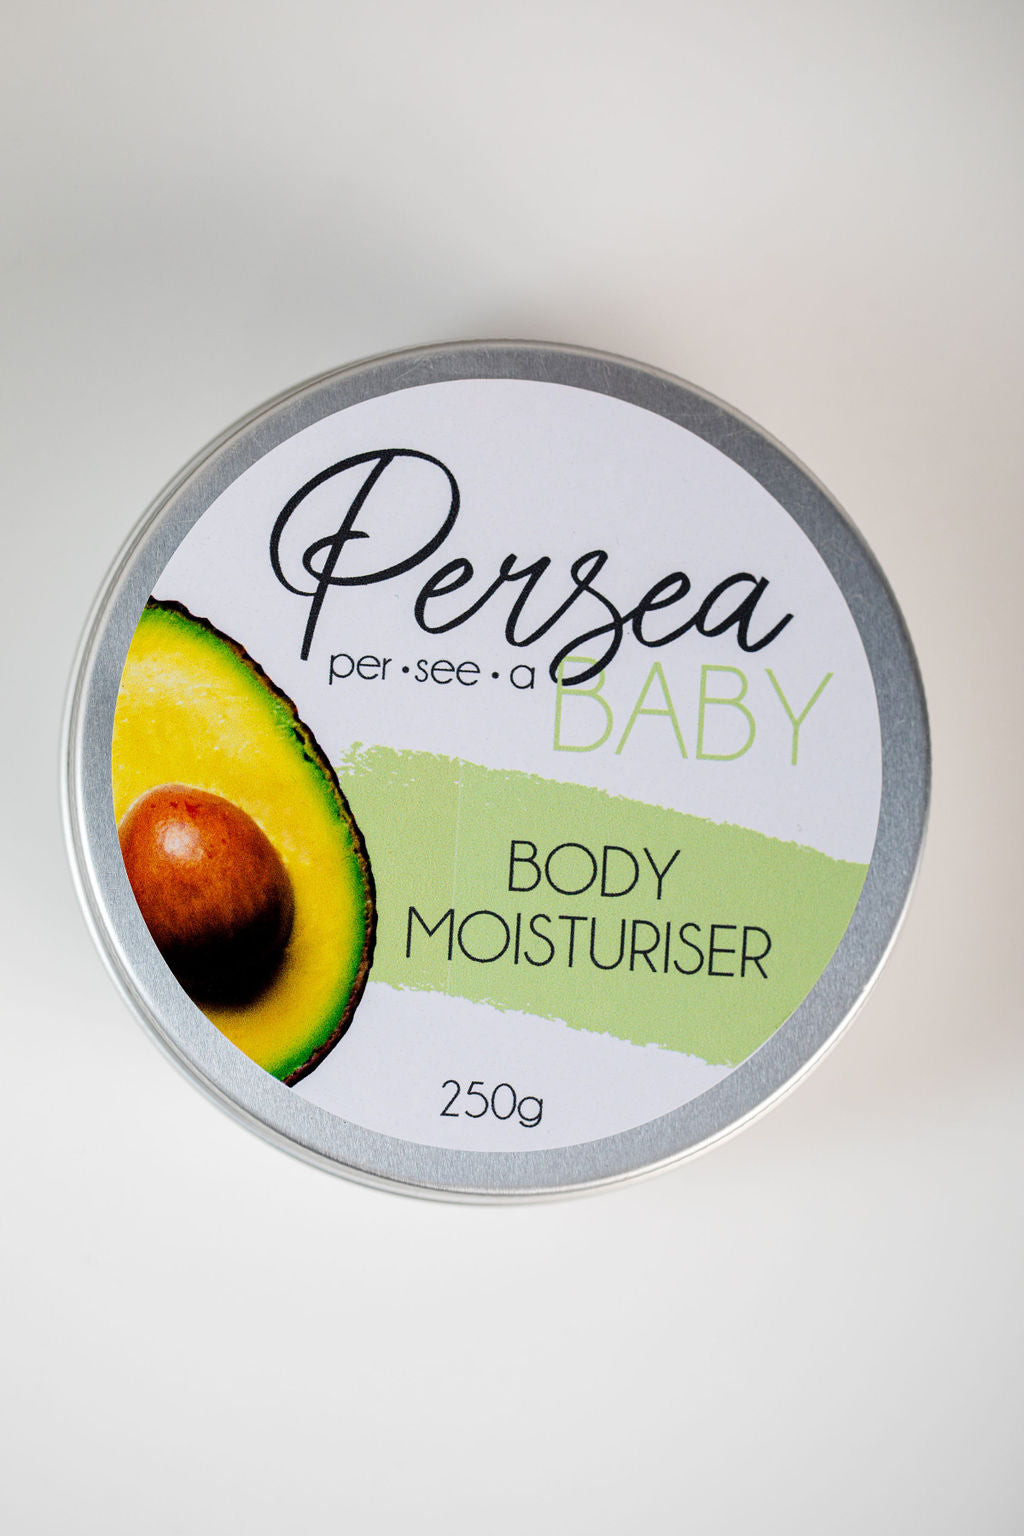 Persea Baby Body Moisturiser. All Natural.